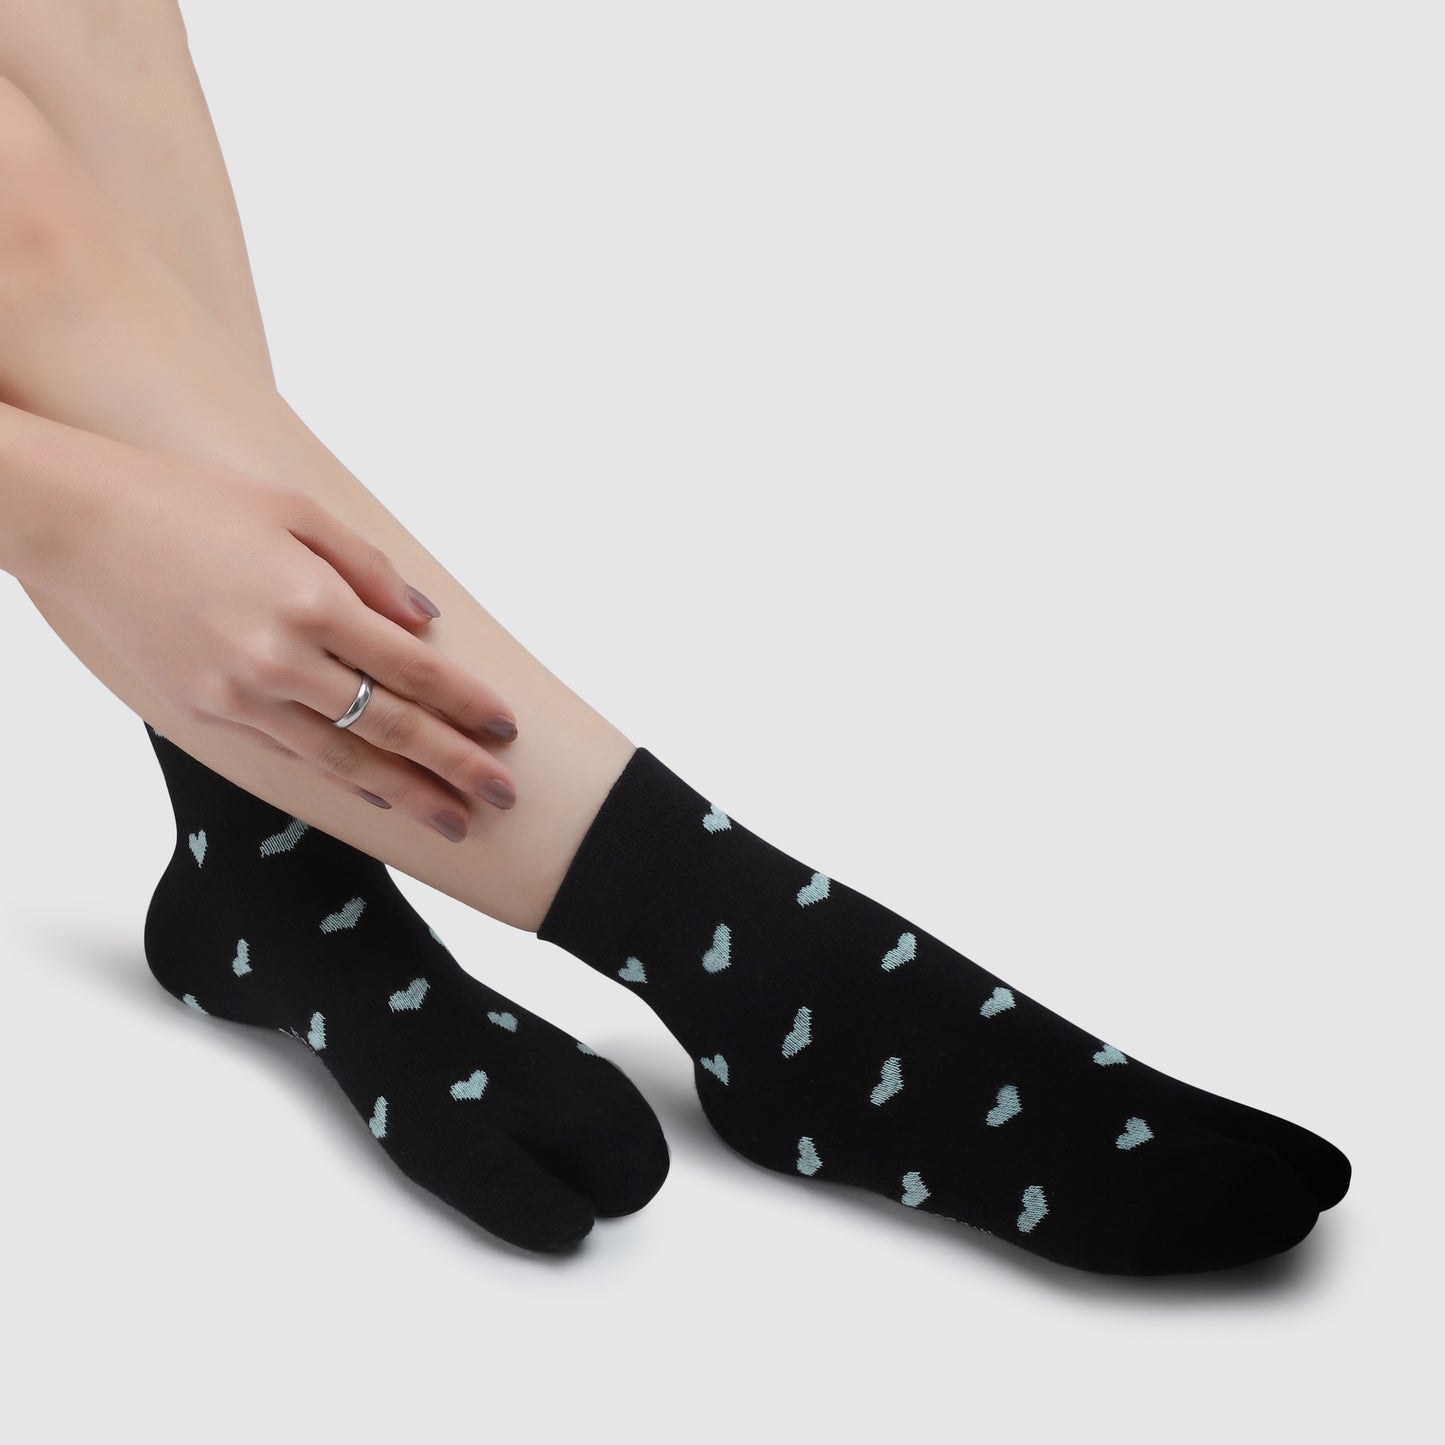 Little Hearts Ankle Thumb Socks-Black